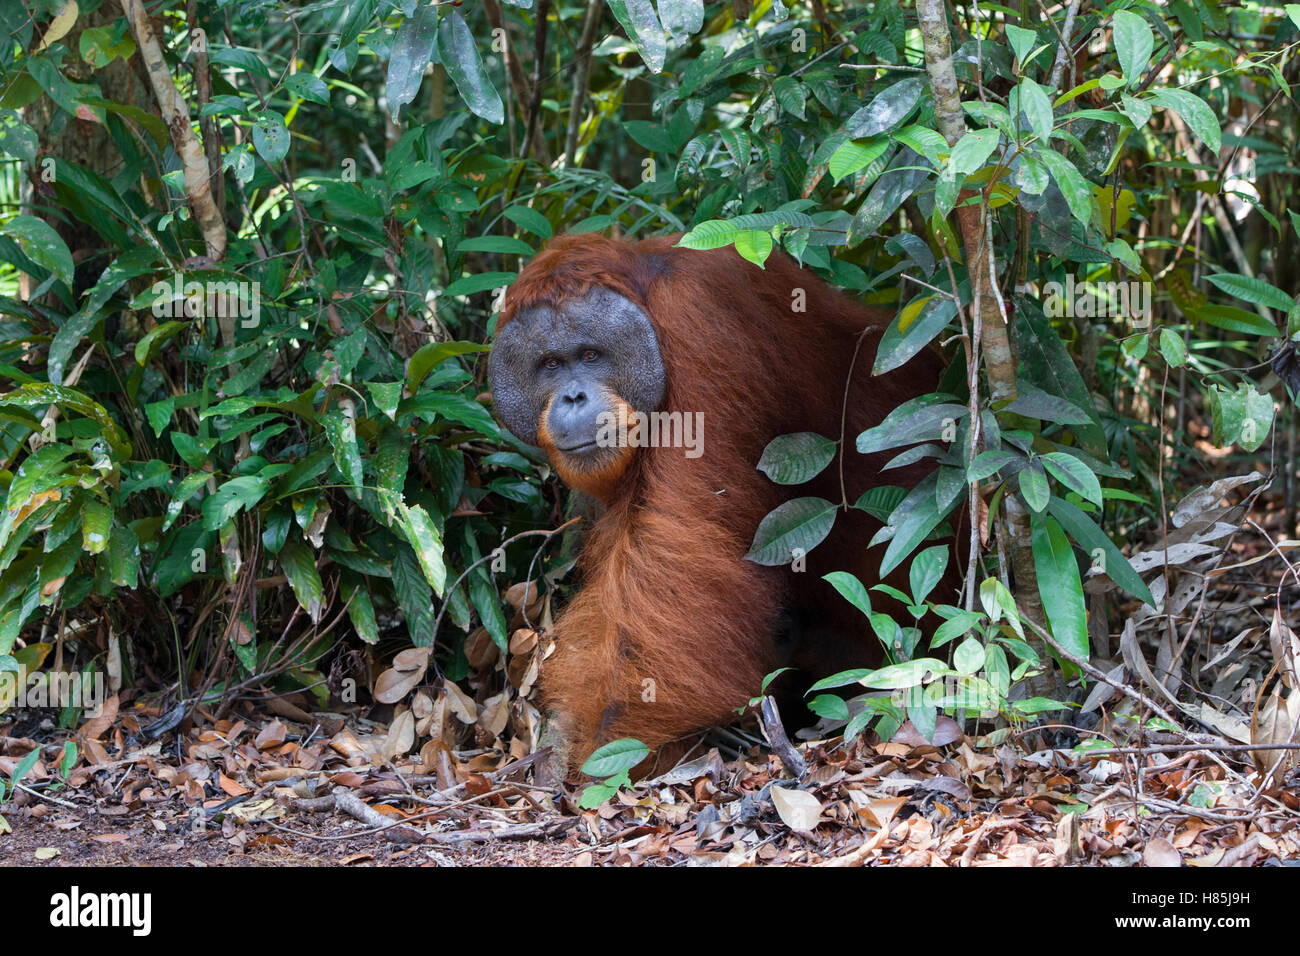 Orangutan Pongo Pygmaeus Male Emerging From Rainforest Vegetation